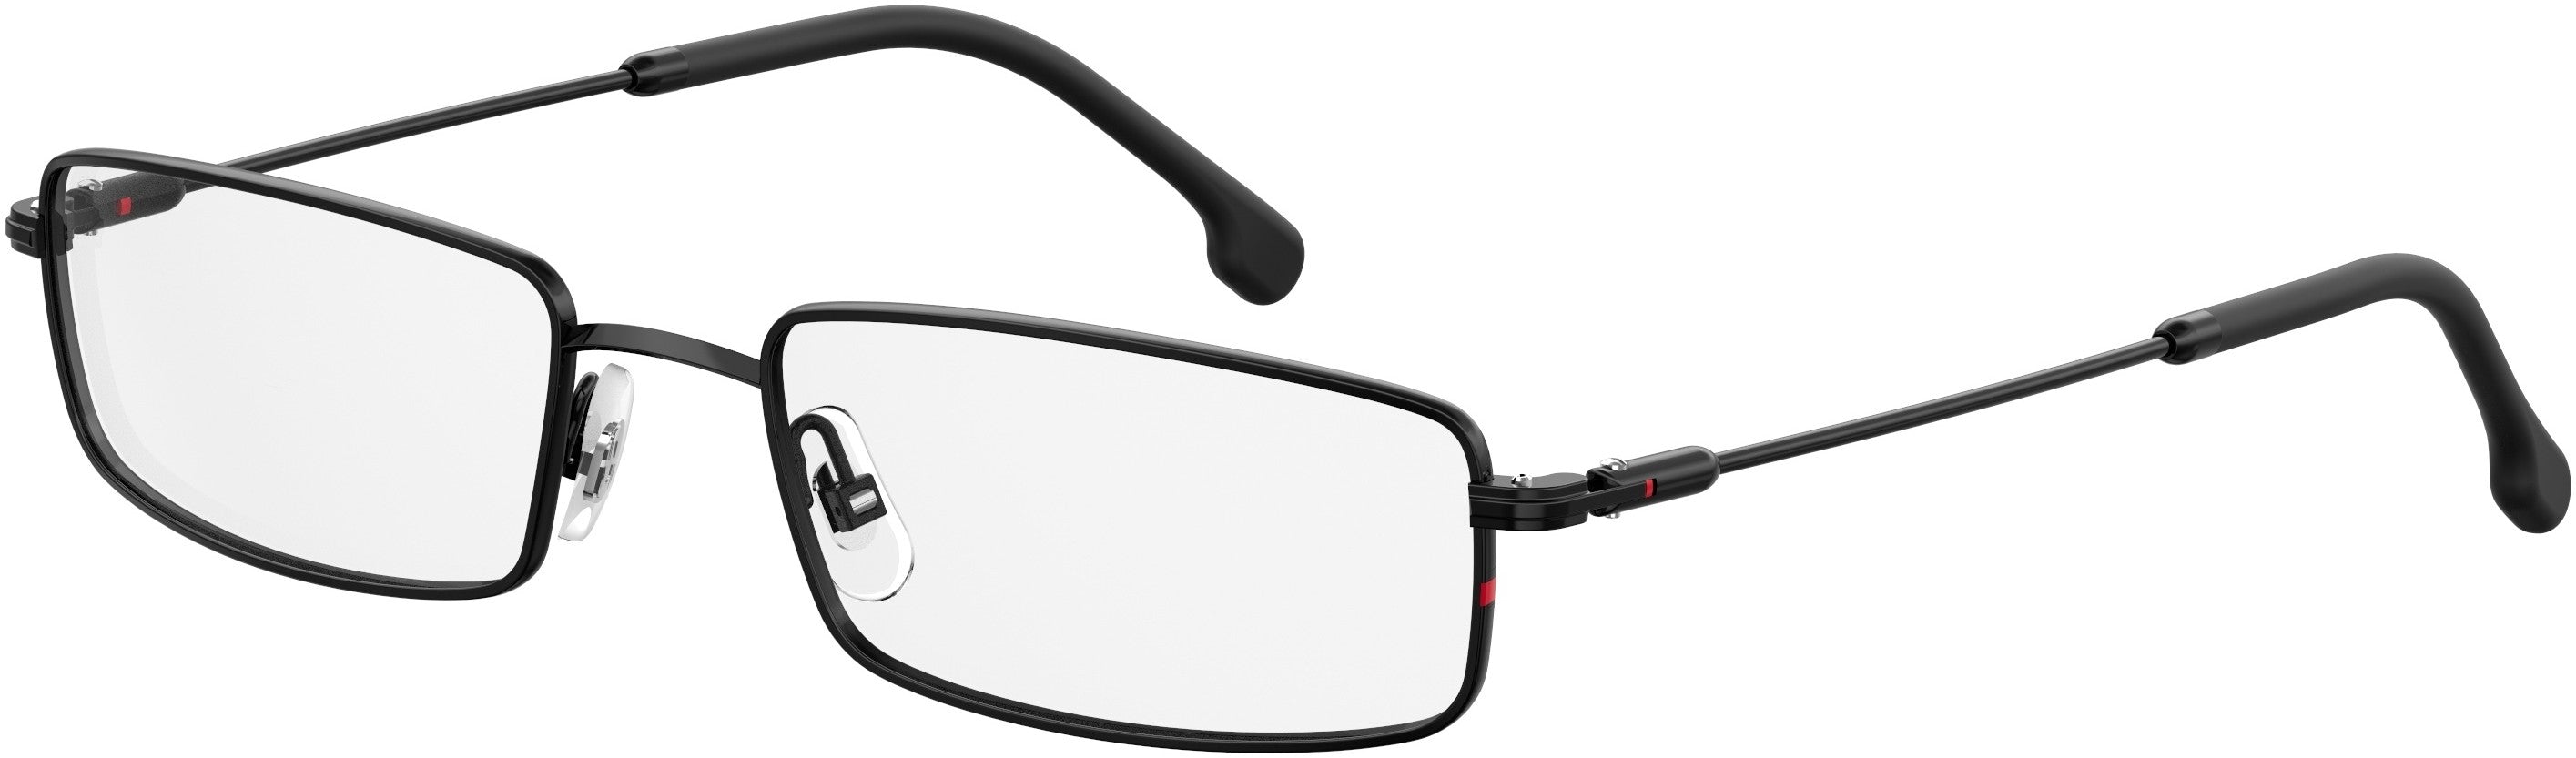  Carrera 177 Rectangular Eyeglasses 0807-0807  Black (00 Demo Lens)